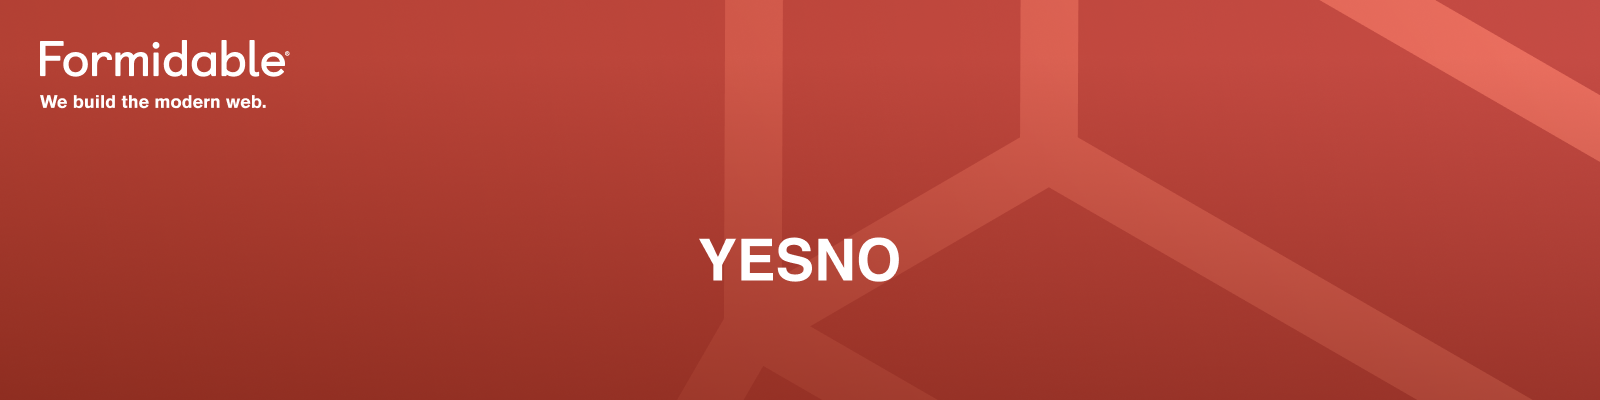 YesNo — Formidable, We build the modern web